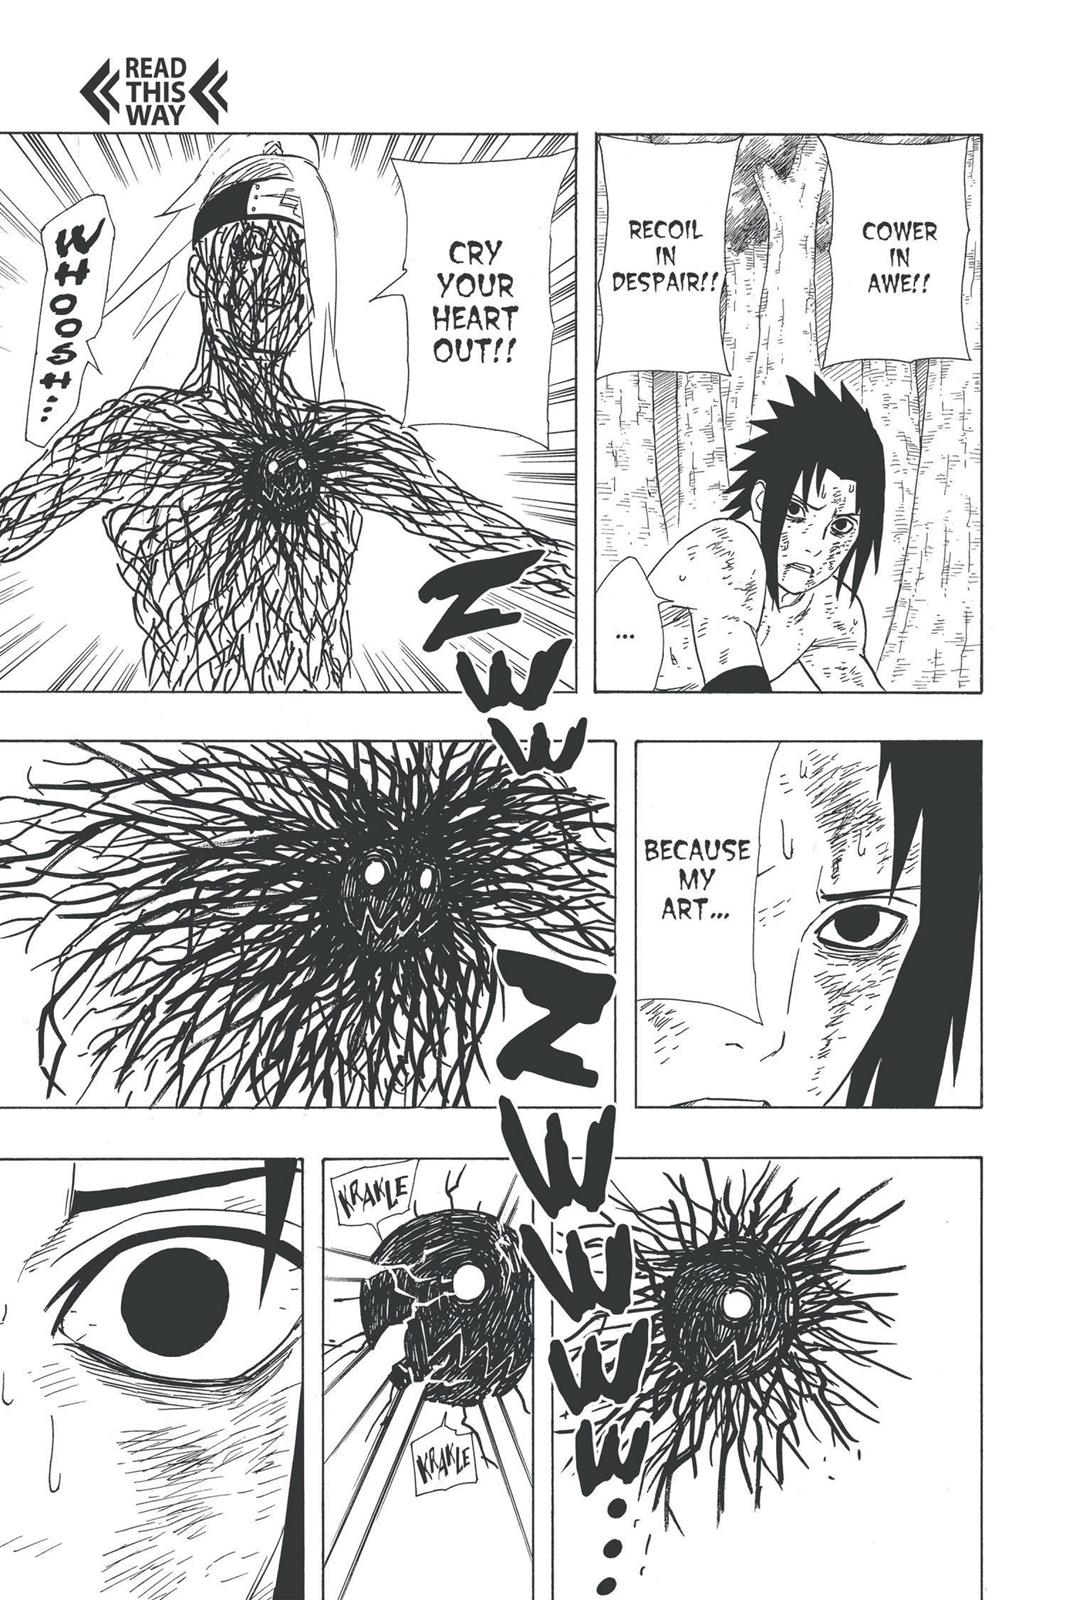 Sasuke MS vs Sakura adulta. - Página 5 0362-015